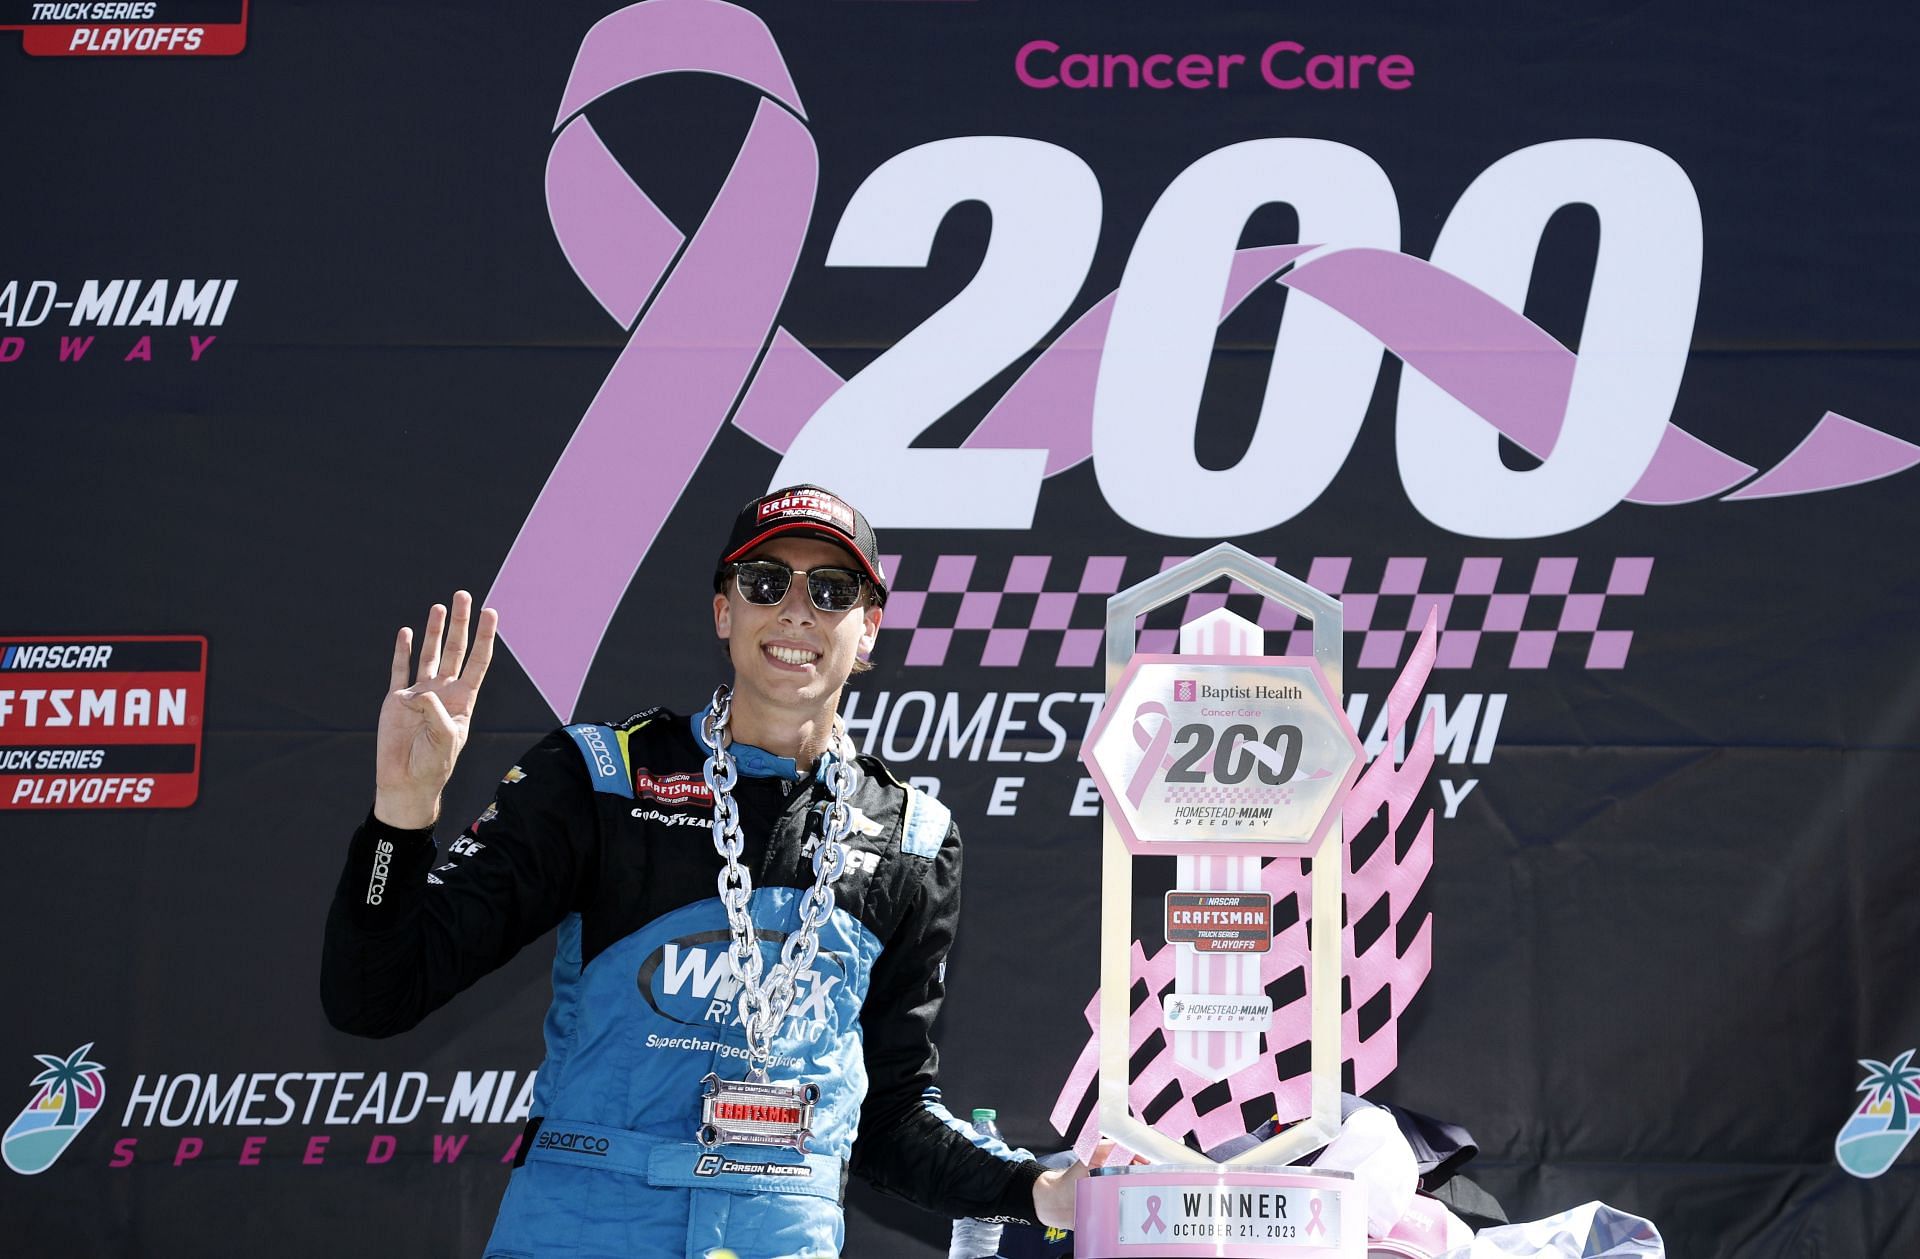 NASCAR Craftsman Truck Series Baptist Health Cancer Care 200